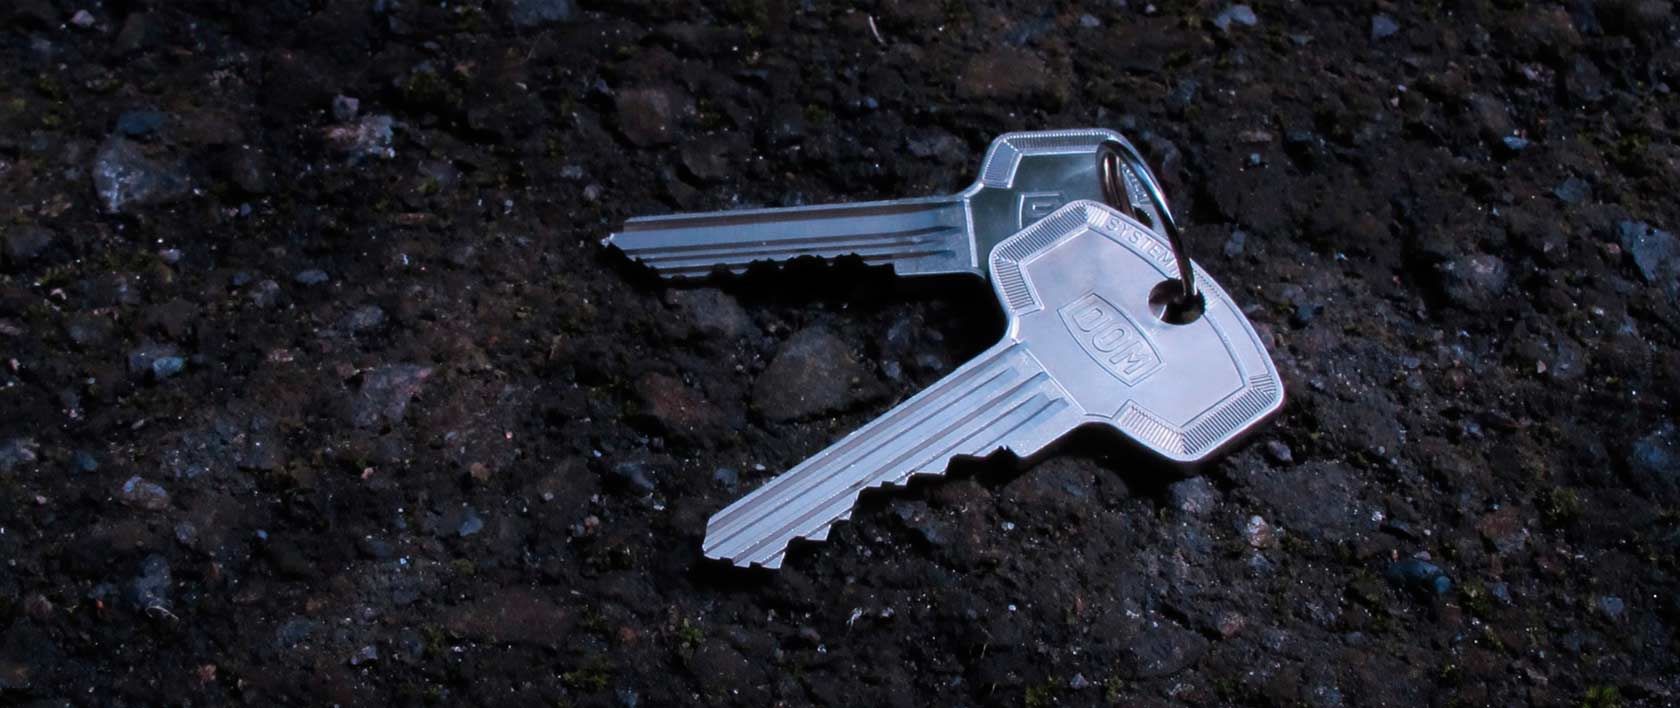 lost-keys